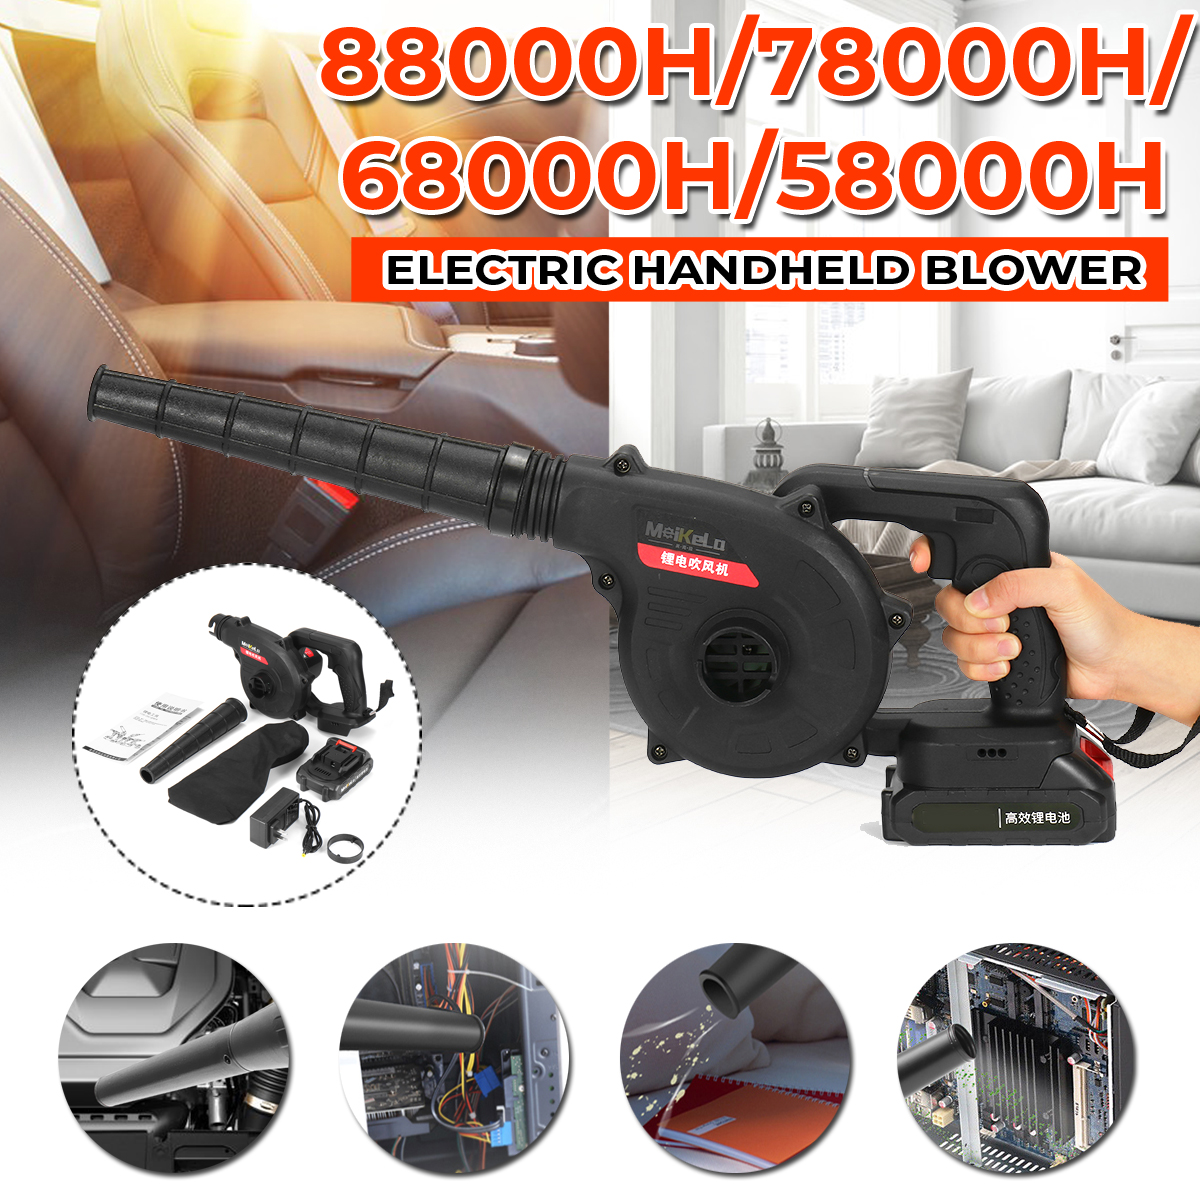 220V-Electric-Cordless-Blower-Air-Leaf-Dust-Blower-Power-Tools-88000H78000H68000H58000H-Li-Ion-Batte-1709523-1